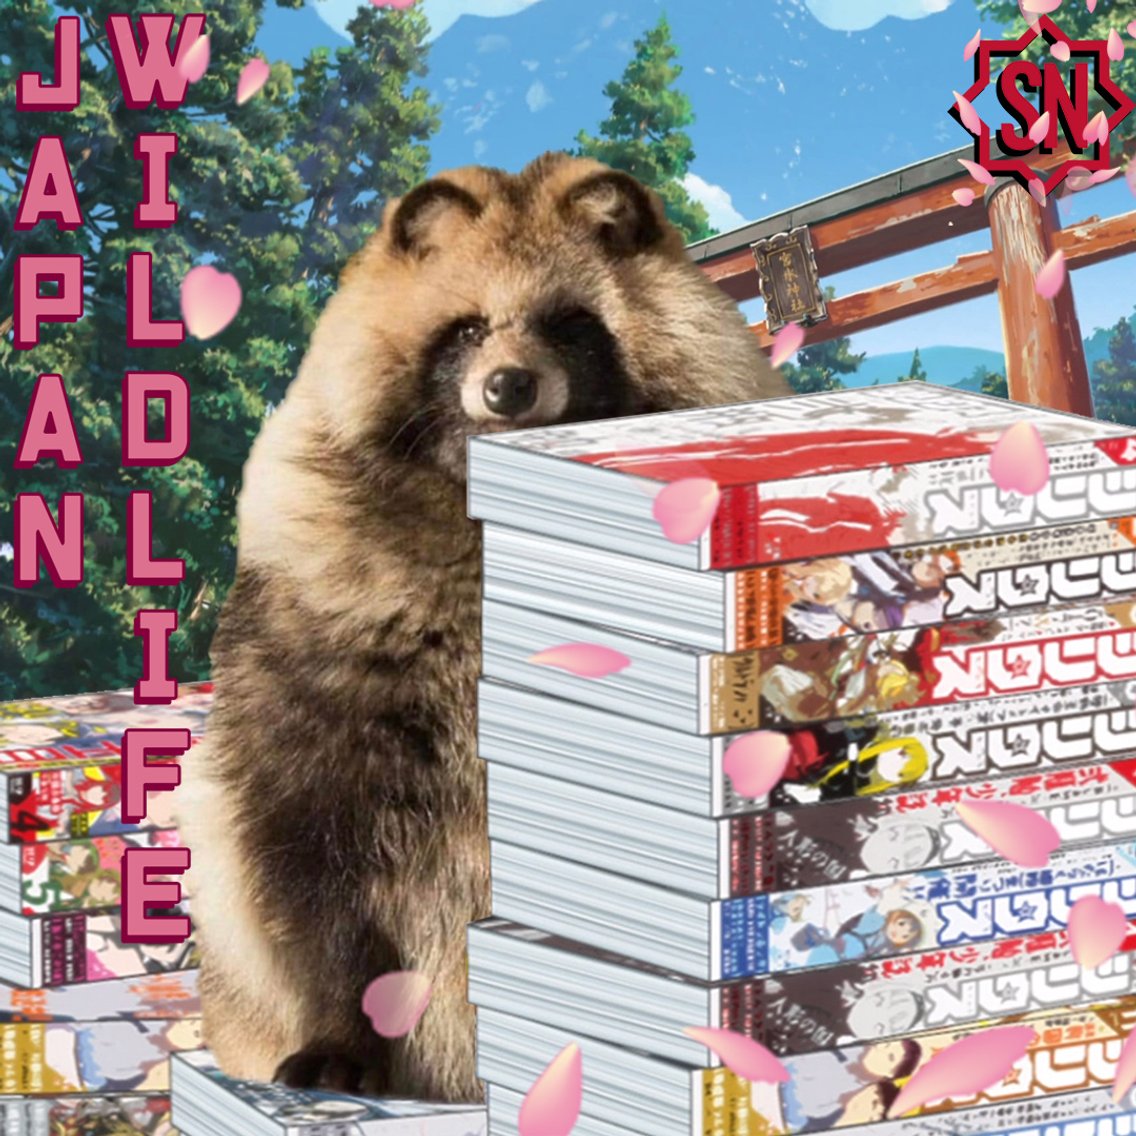 Stay Nerd - Japan Wildlife - Cover Image